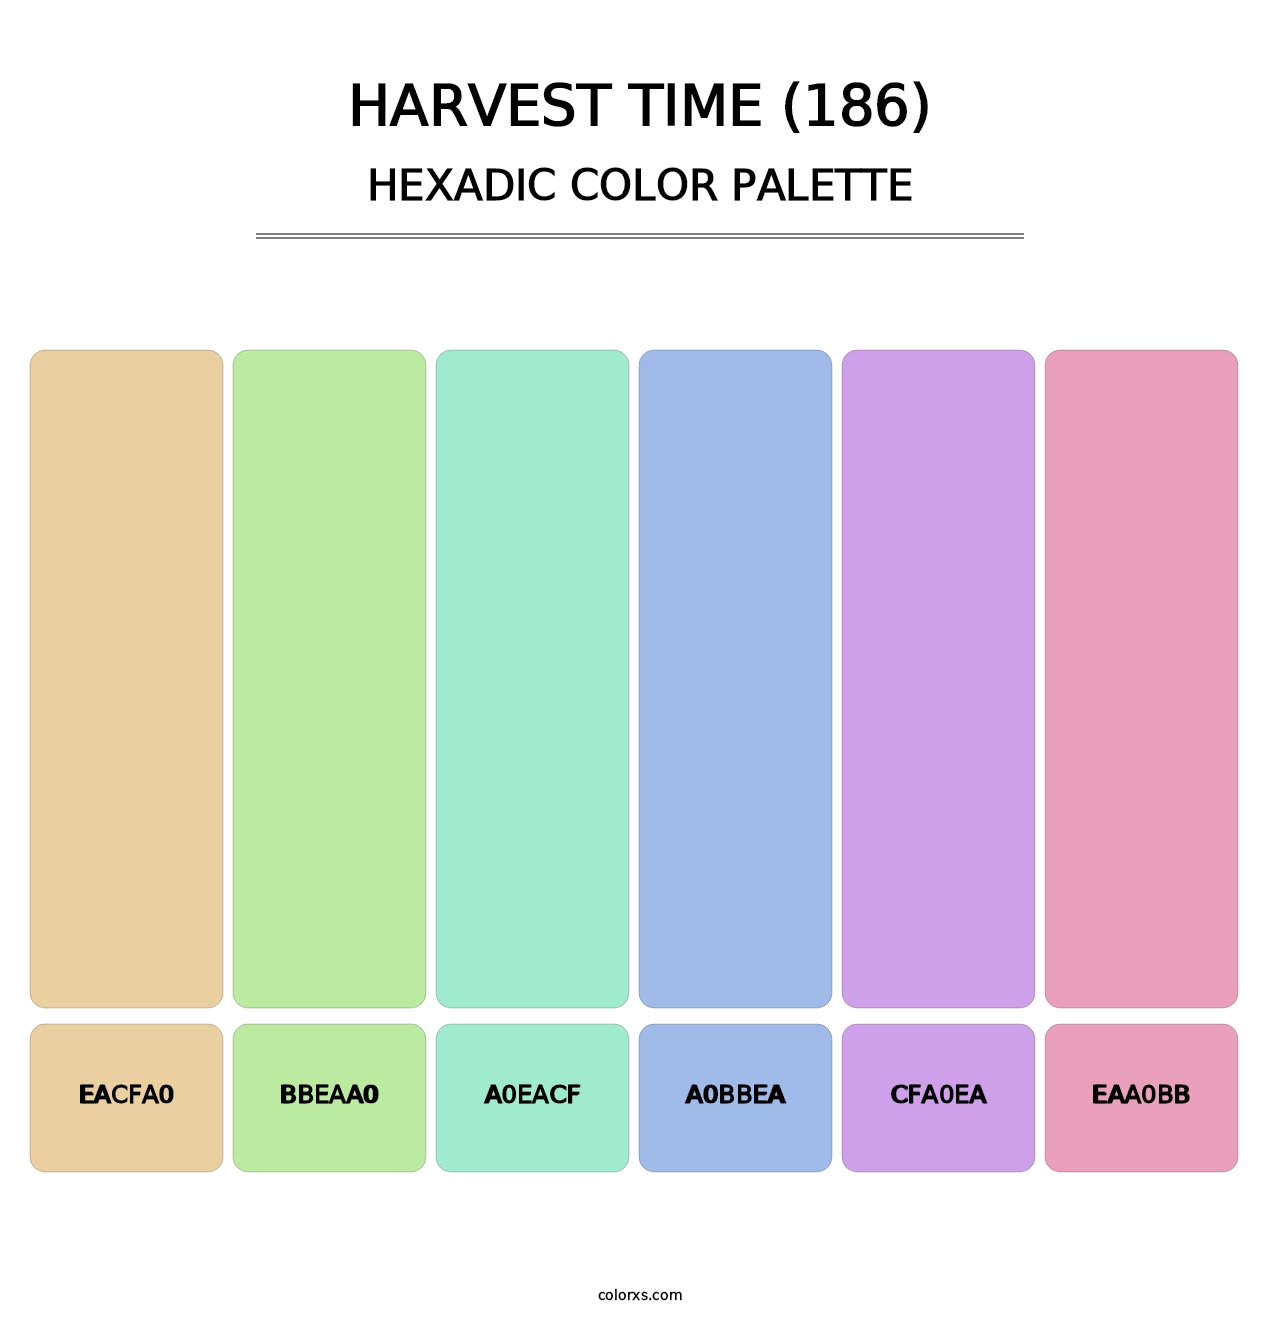 Harvest Time (186) - Hexadic Color Palette